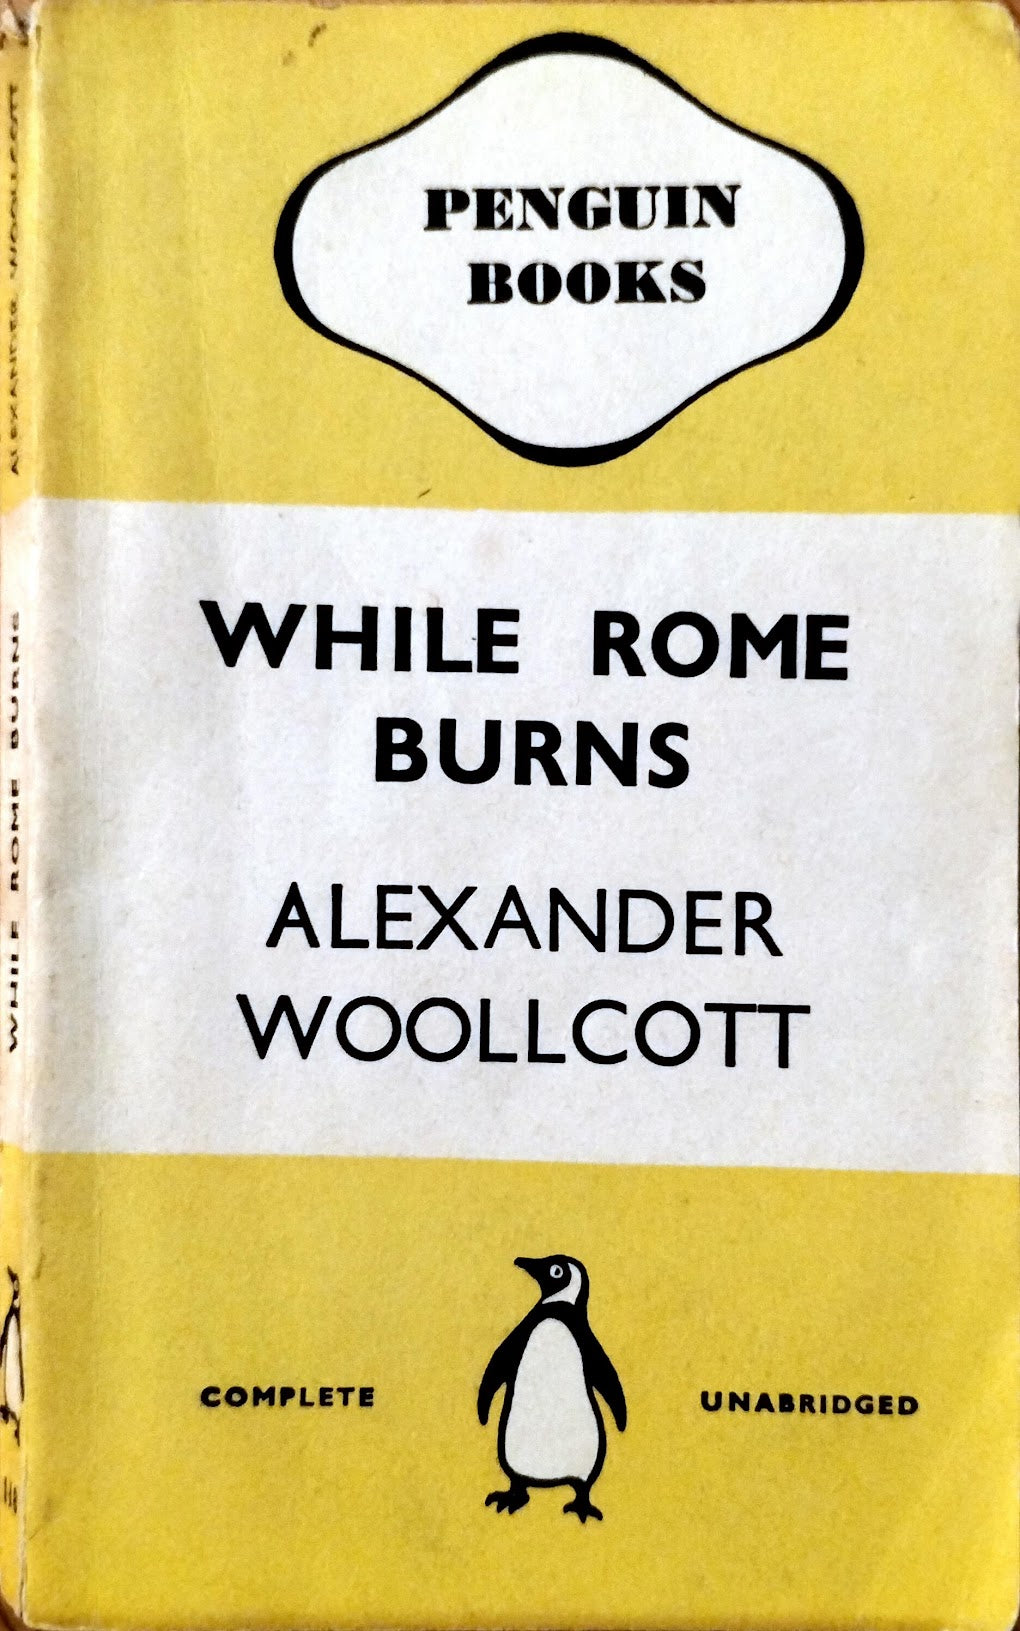 While Rome Burns by Alexander Woollcott